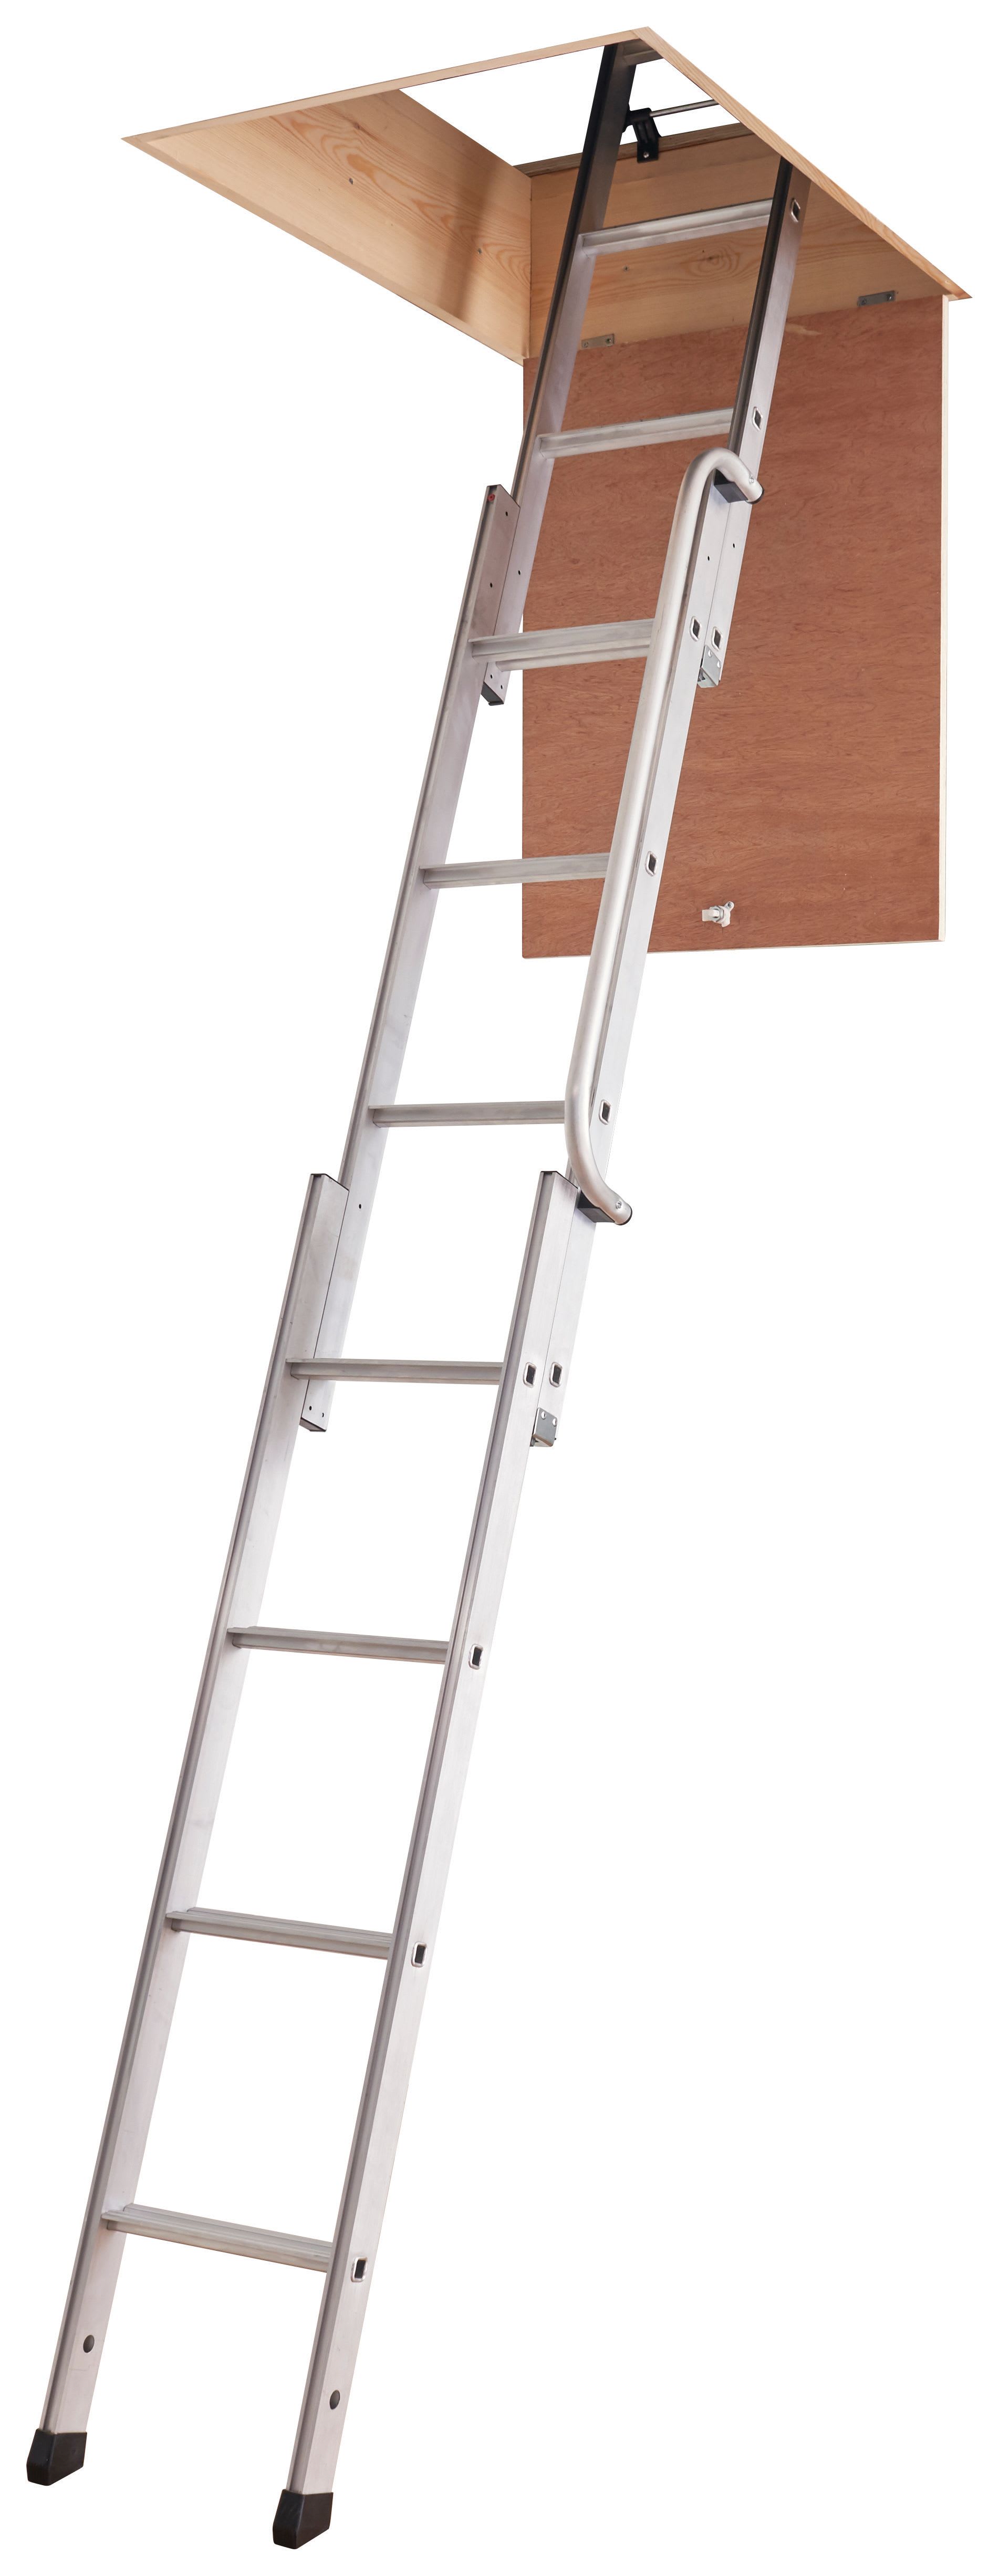 Youngman Easiway 3 Section Aluminium Loft Ladder